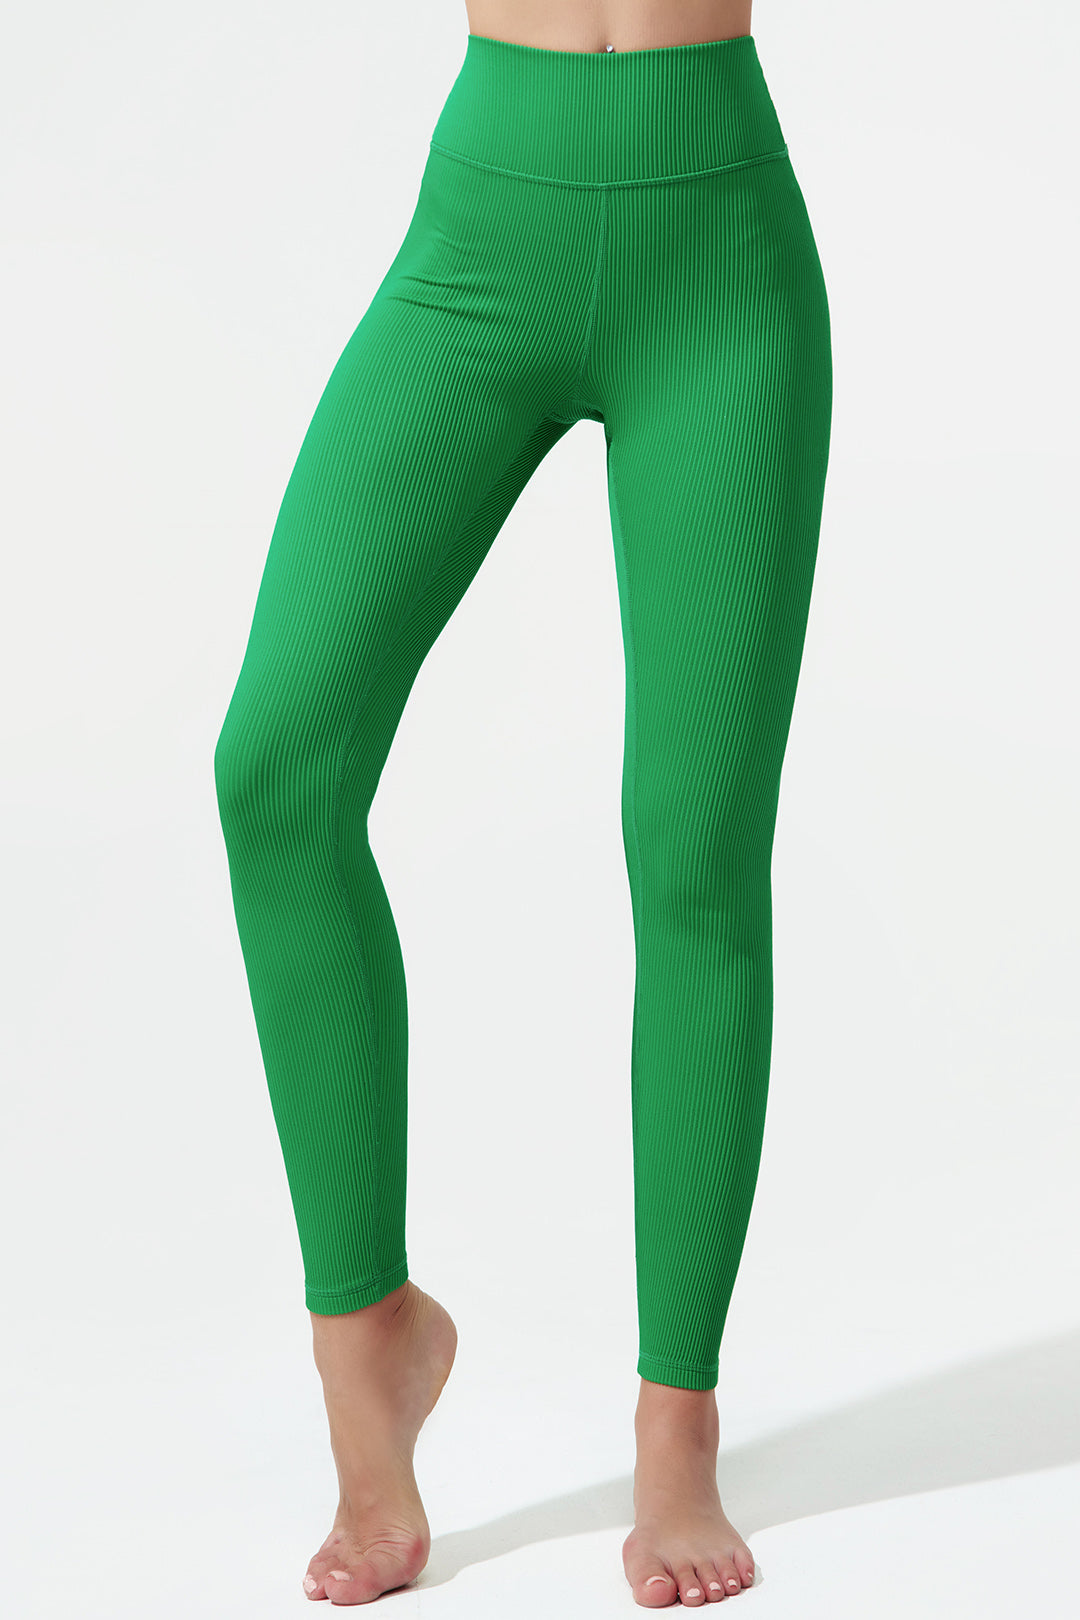 Querida high-waist fern green leggings for women, showcasing a stylish and comfortable design.